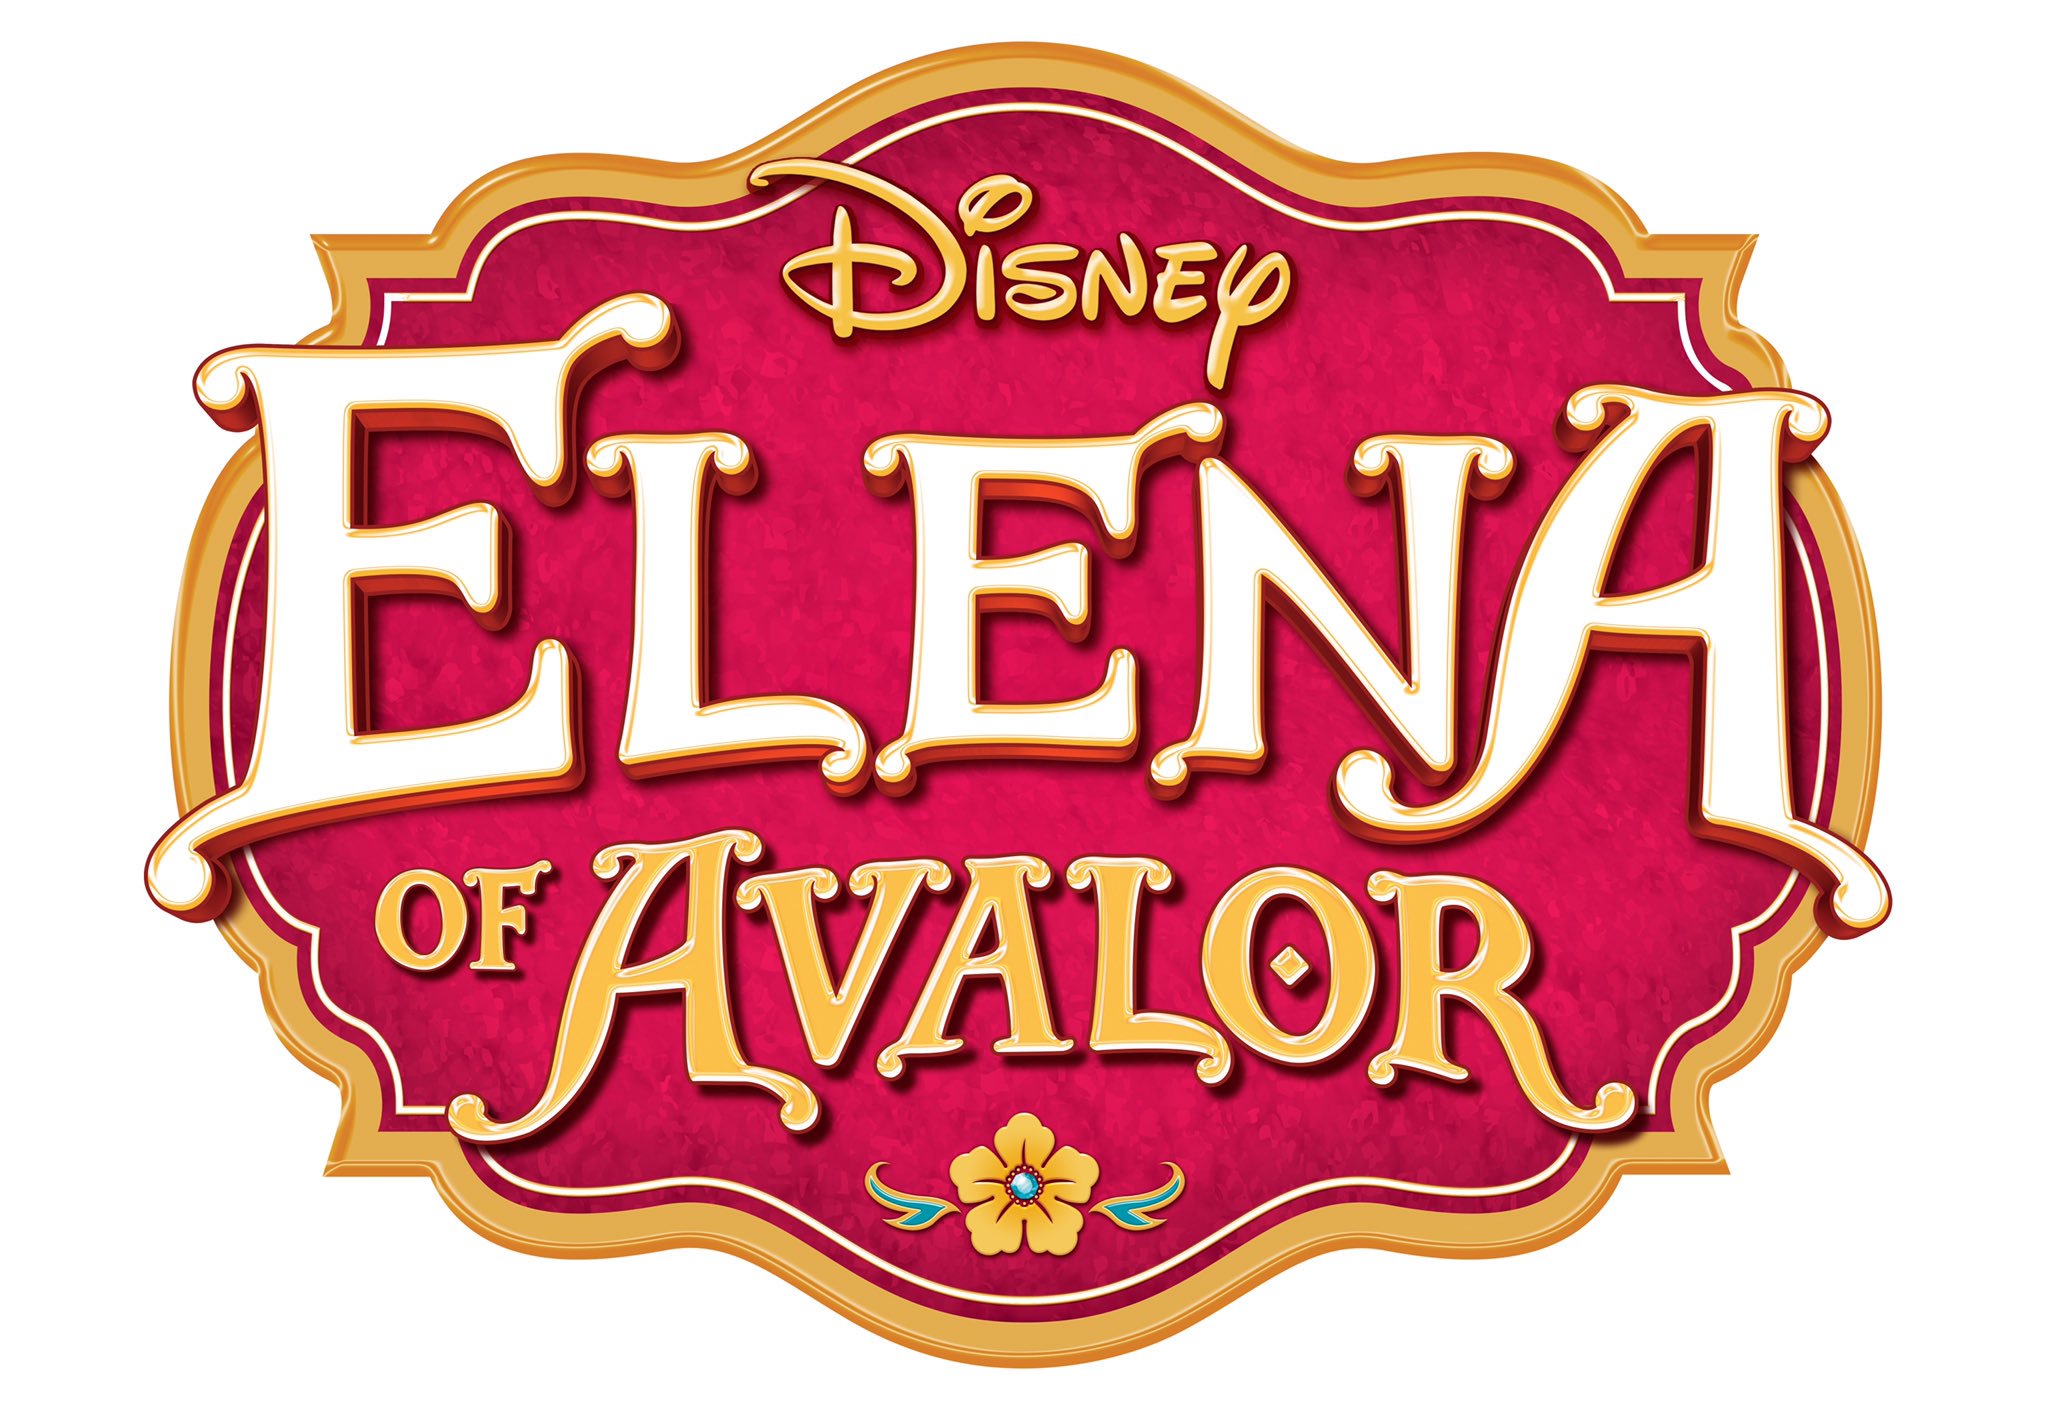 Elena of avalor logo